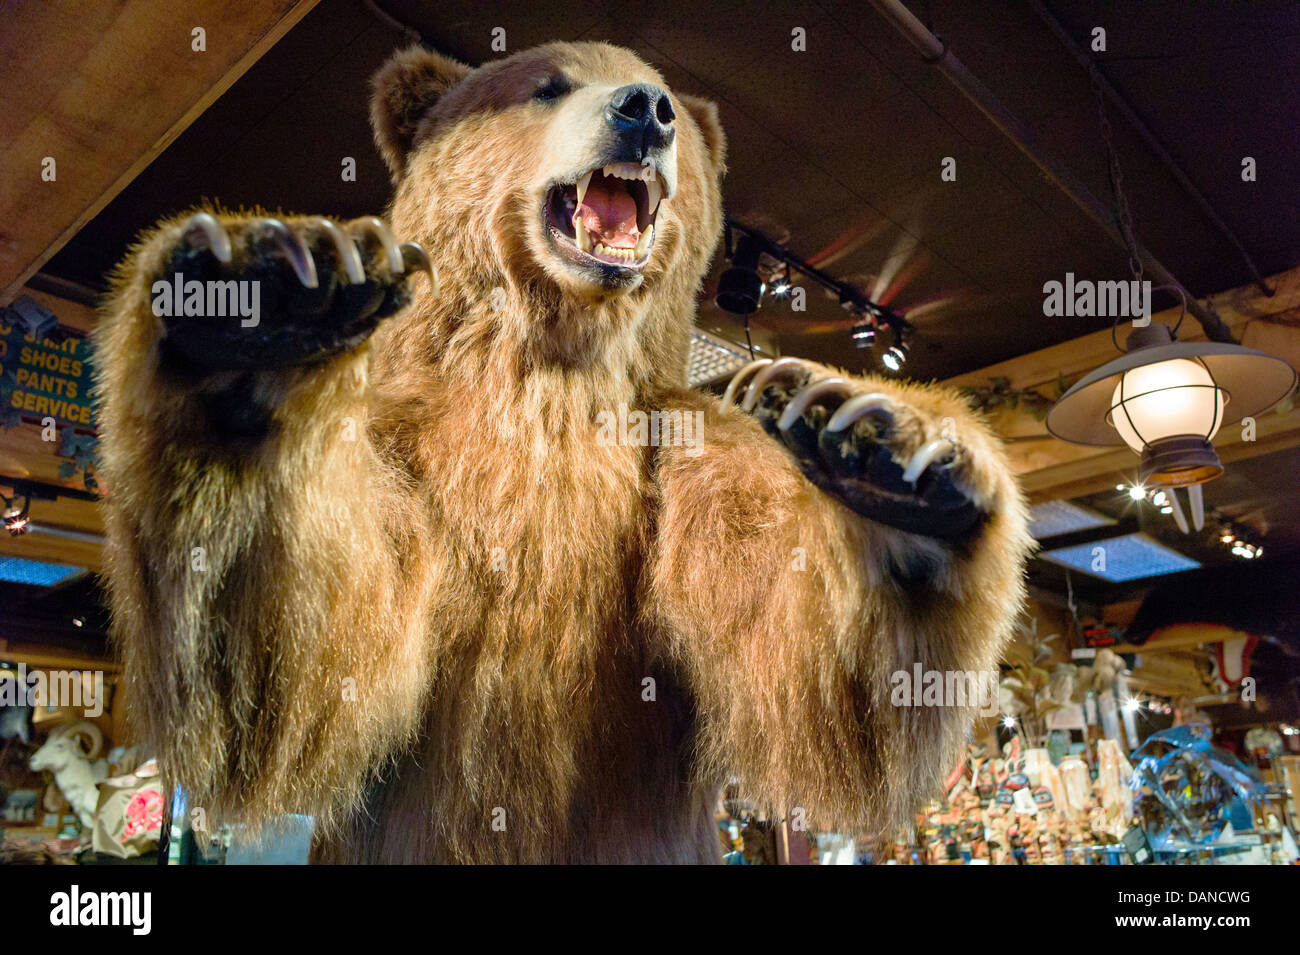 Lifesize stuffed Grizzly Bear greets tourists at the entrance to a souvenir shop, Anchorage, Alaska, USA Stock Photo